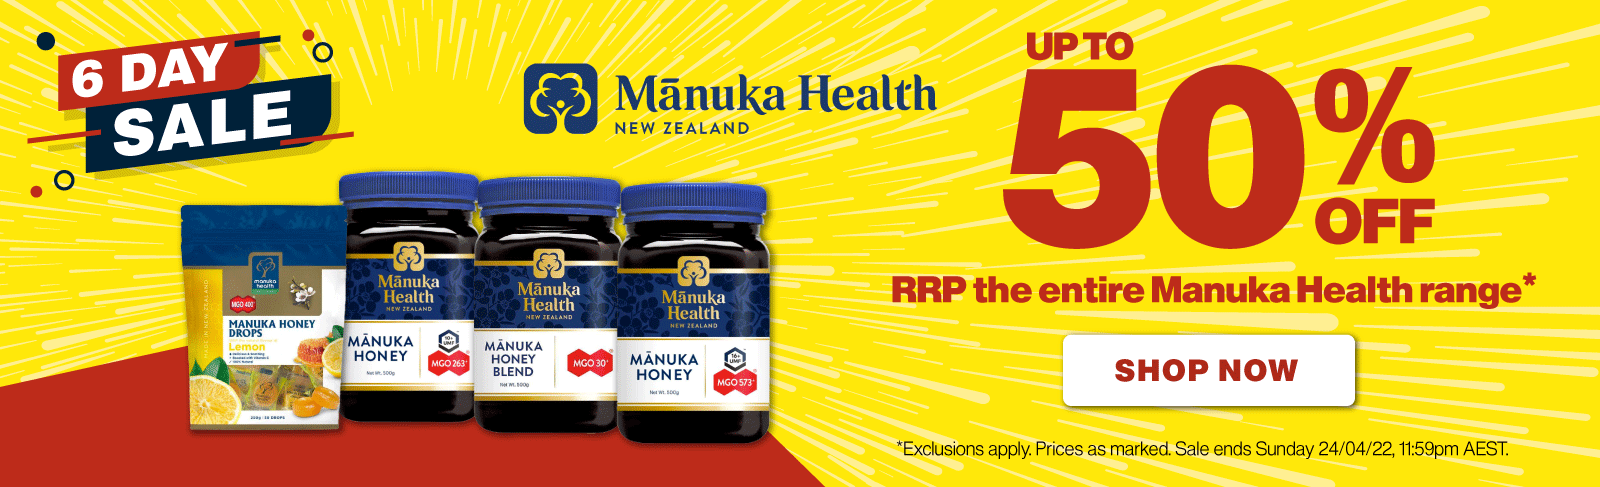 Mr Vitamins up to 50% OFF on big brands like Manuka Health range, Go Healthy